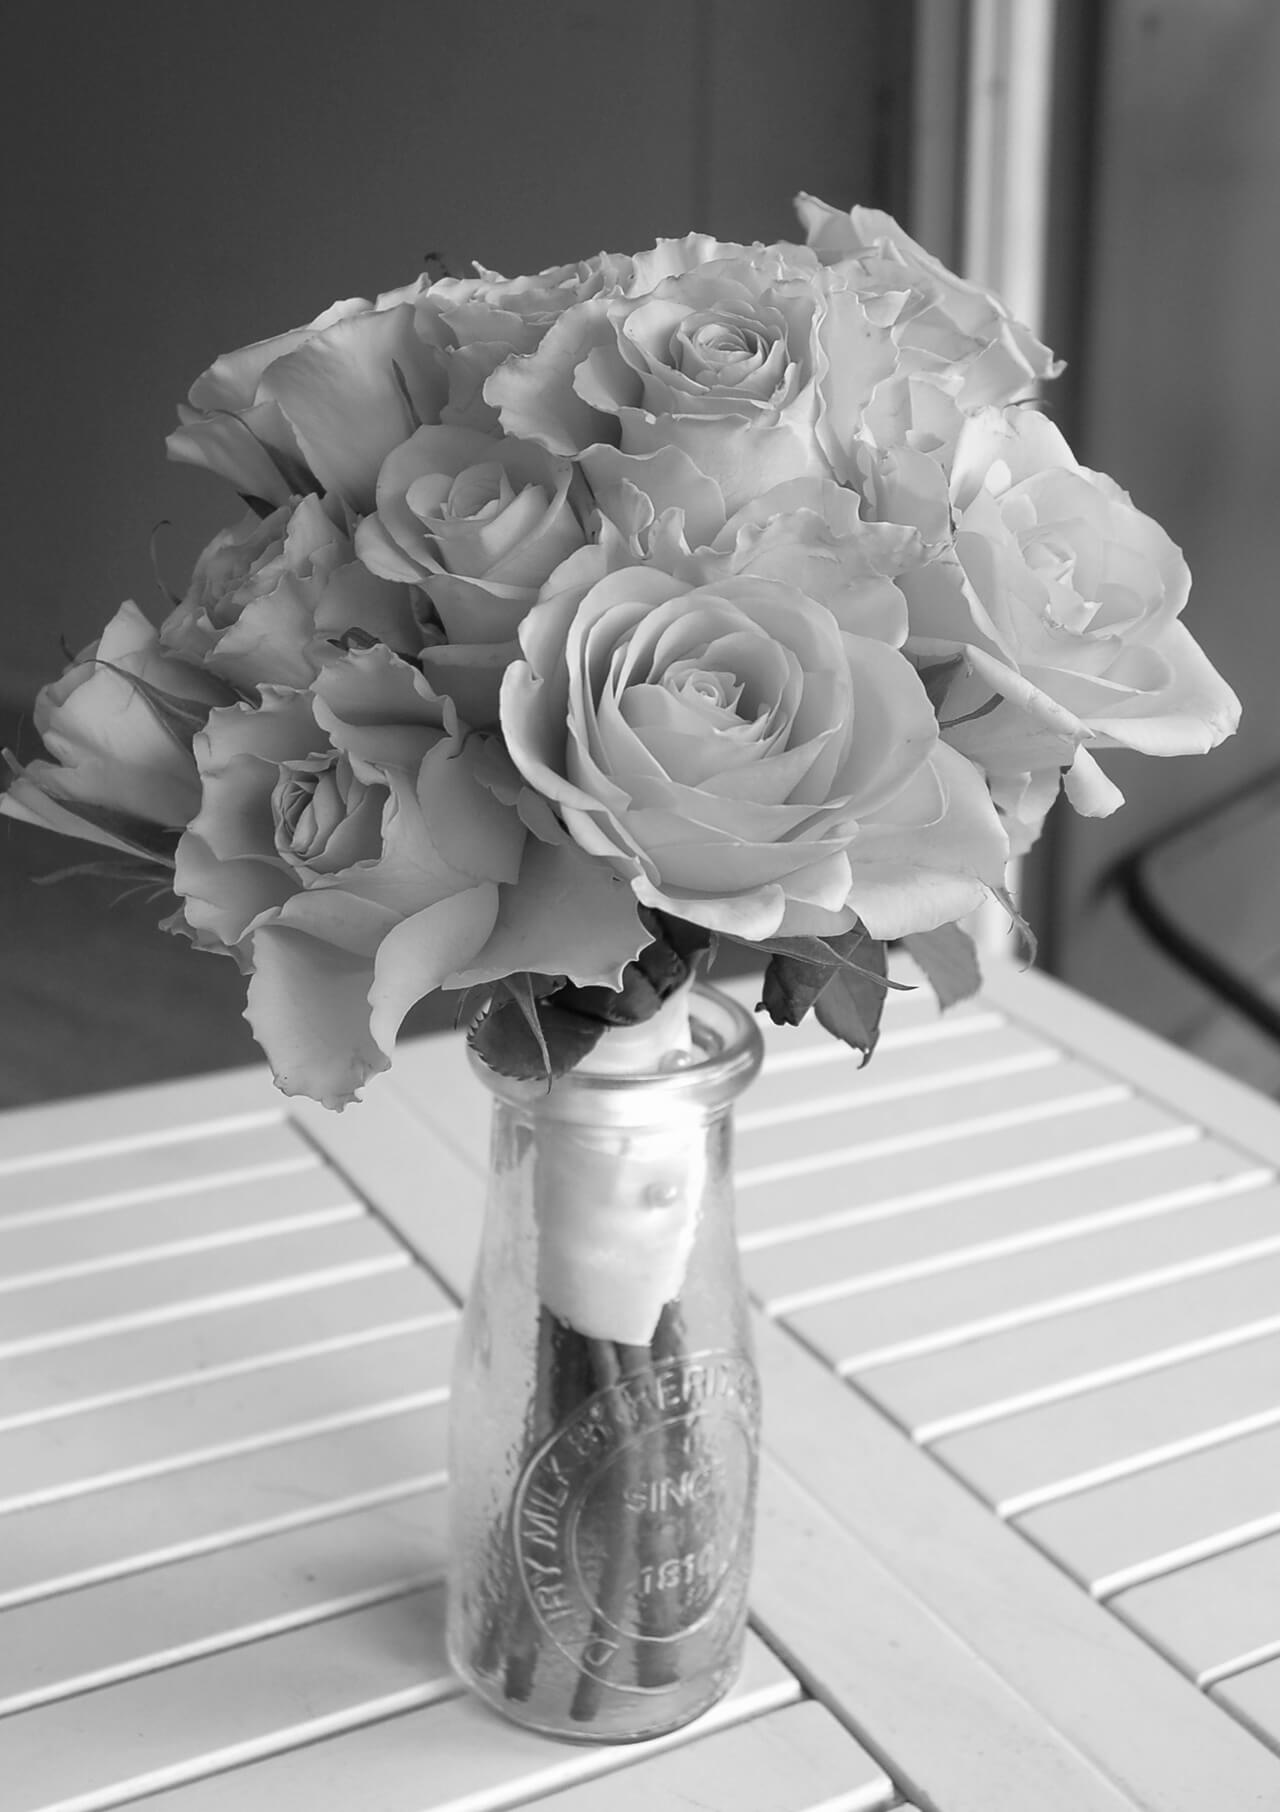 Black and white roses in vase